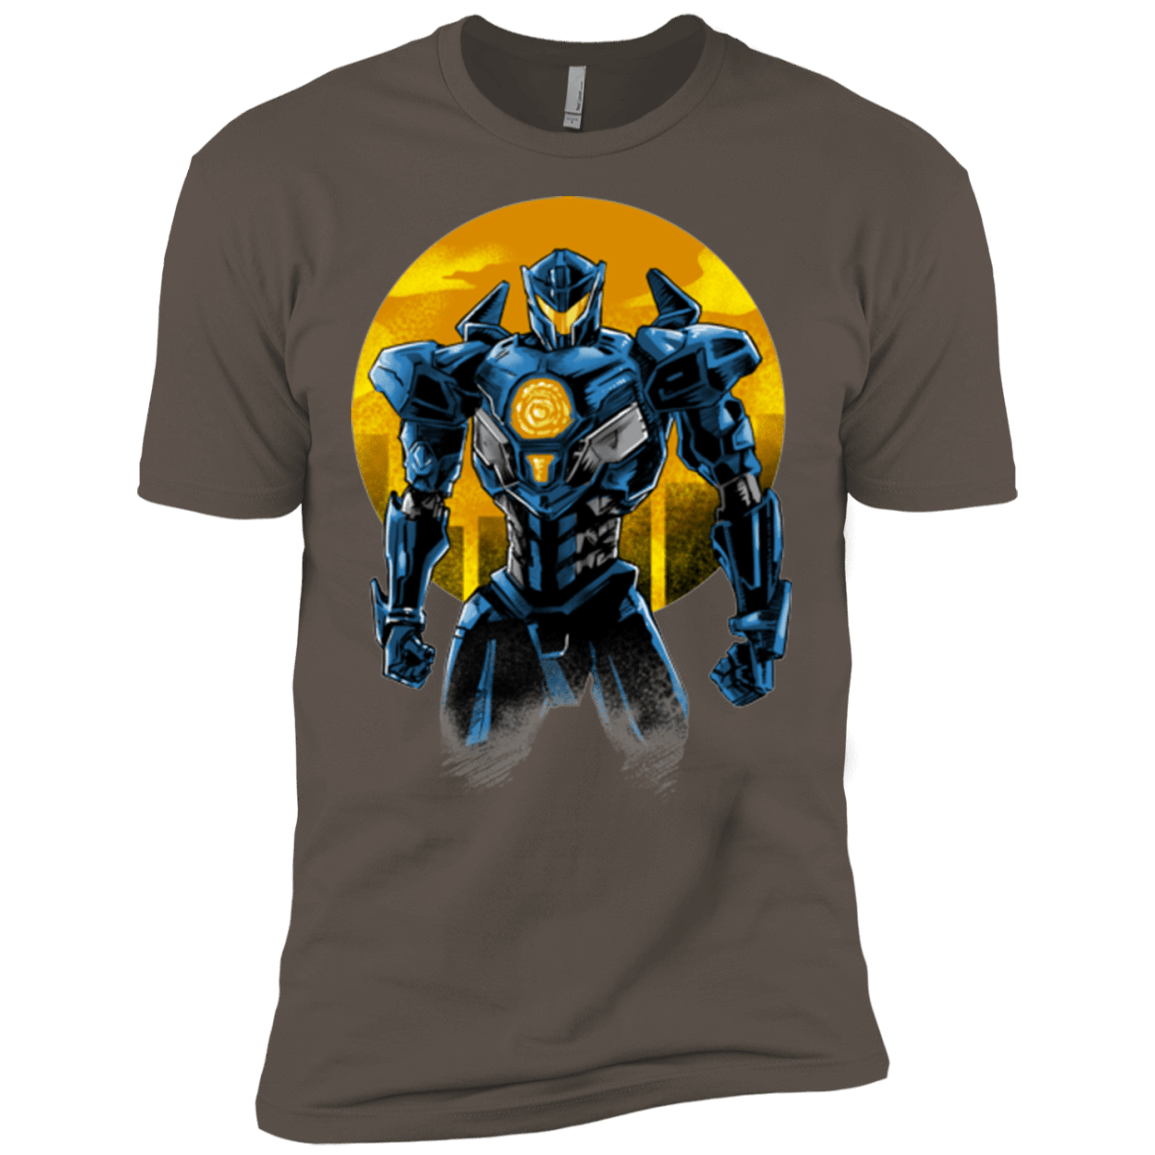 T-Shirts Warm Grey / X-Small Titan Avenger Men's Premium T-Shirt